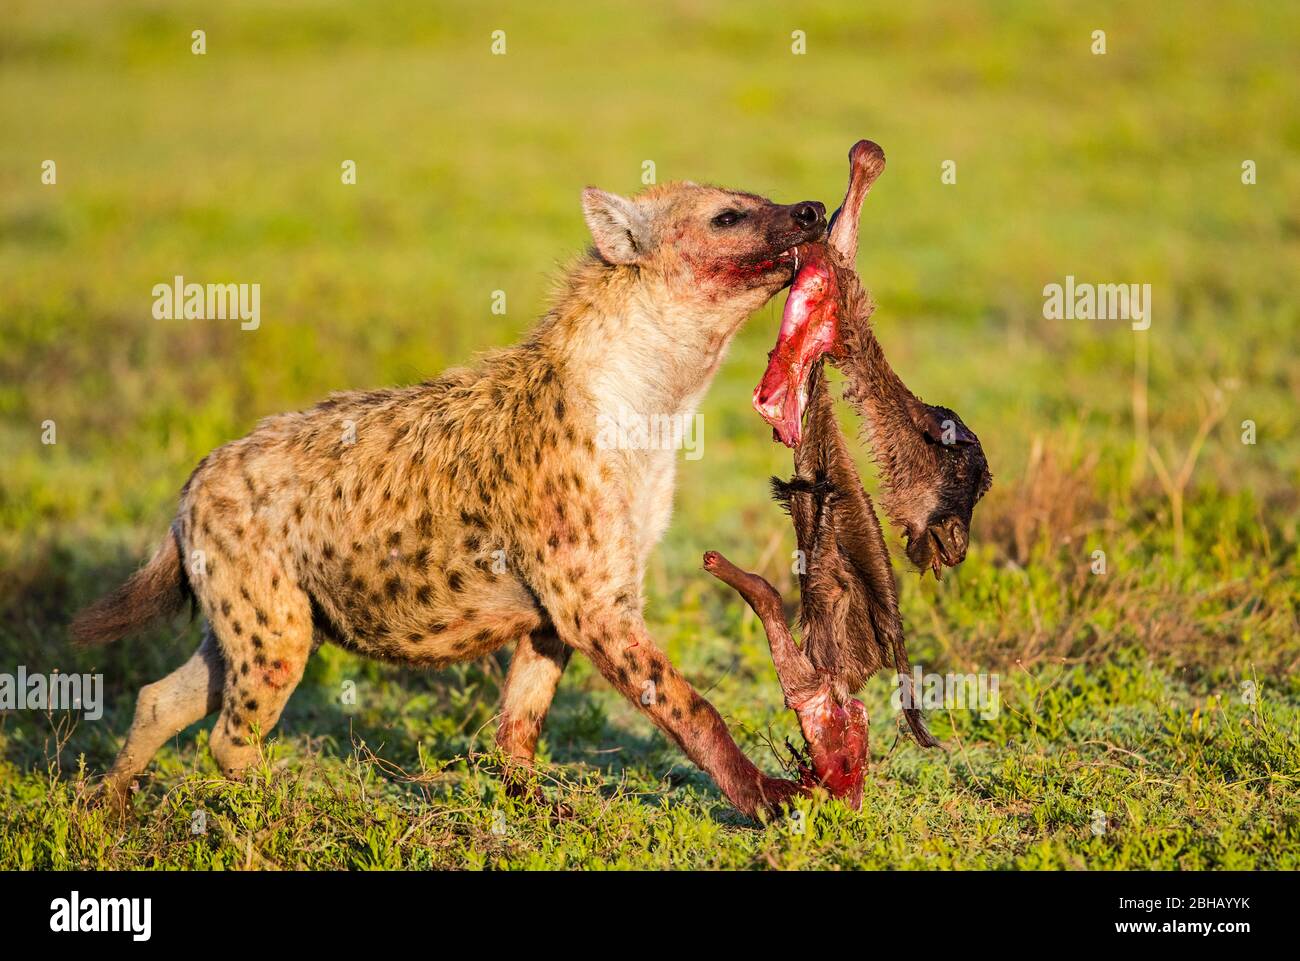 Spotted hyena (Crocuta crocuta) walking with raw flesh in mouth, Tanzania Stock Photo